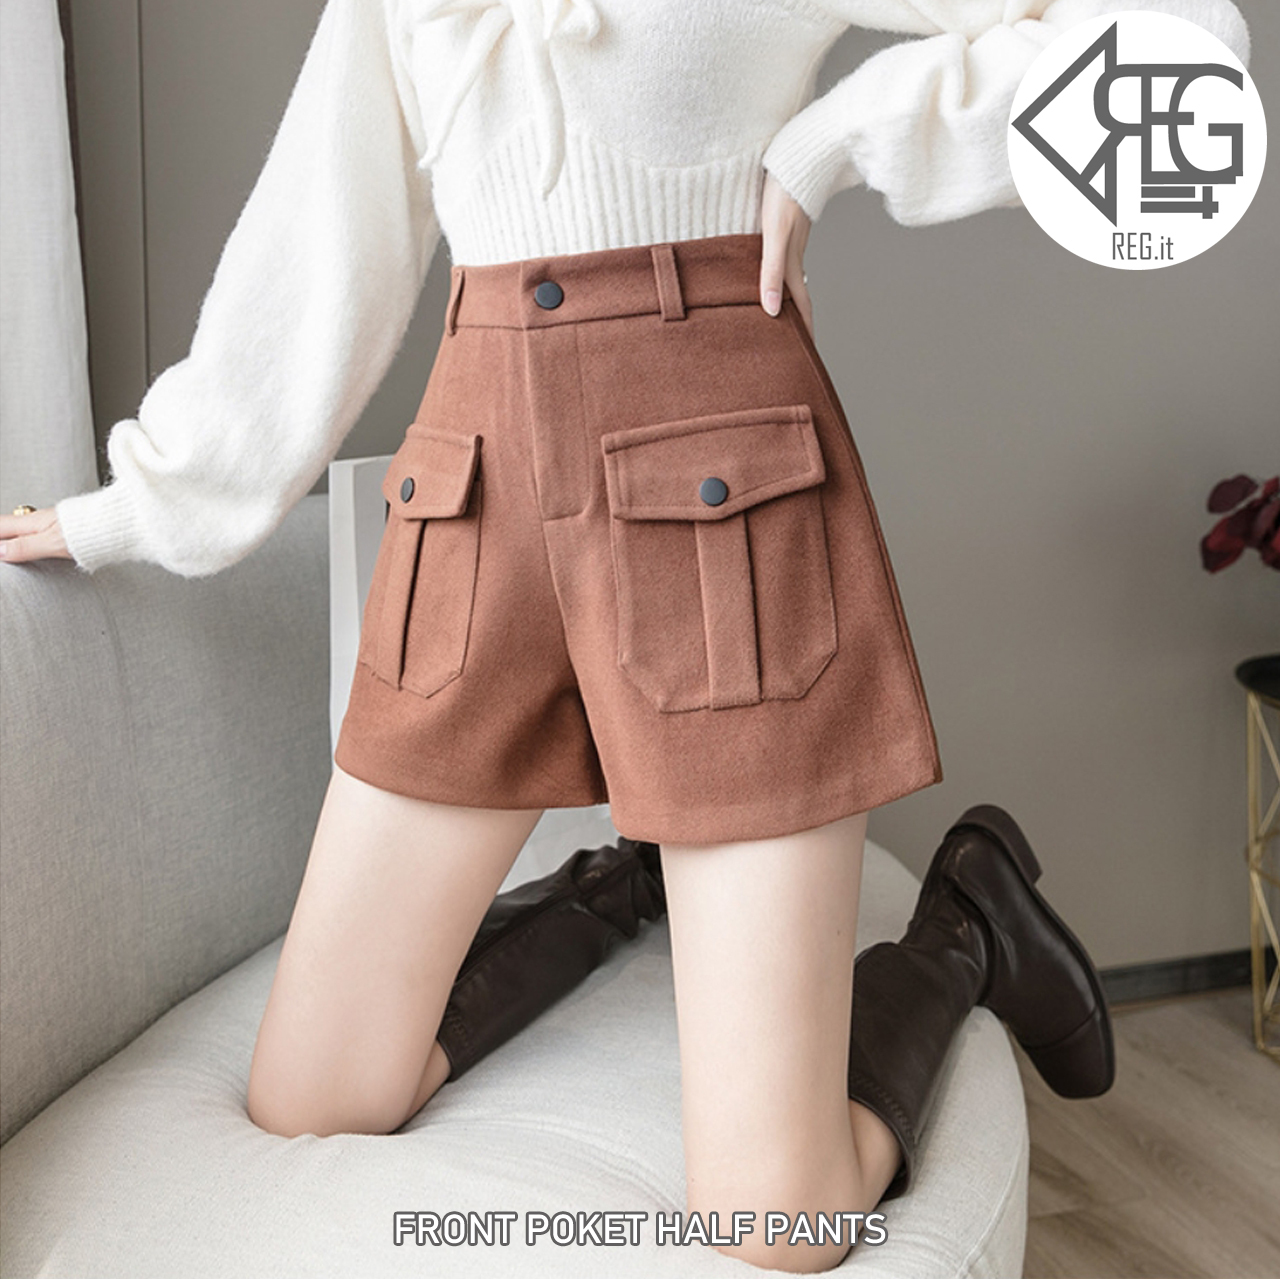 Regit 即納 Front Pocket Half Pants 韓国ファッション ハーフパンツ 冬用ハーフパンツ かわいい S S Regit